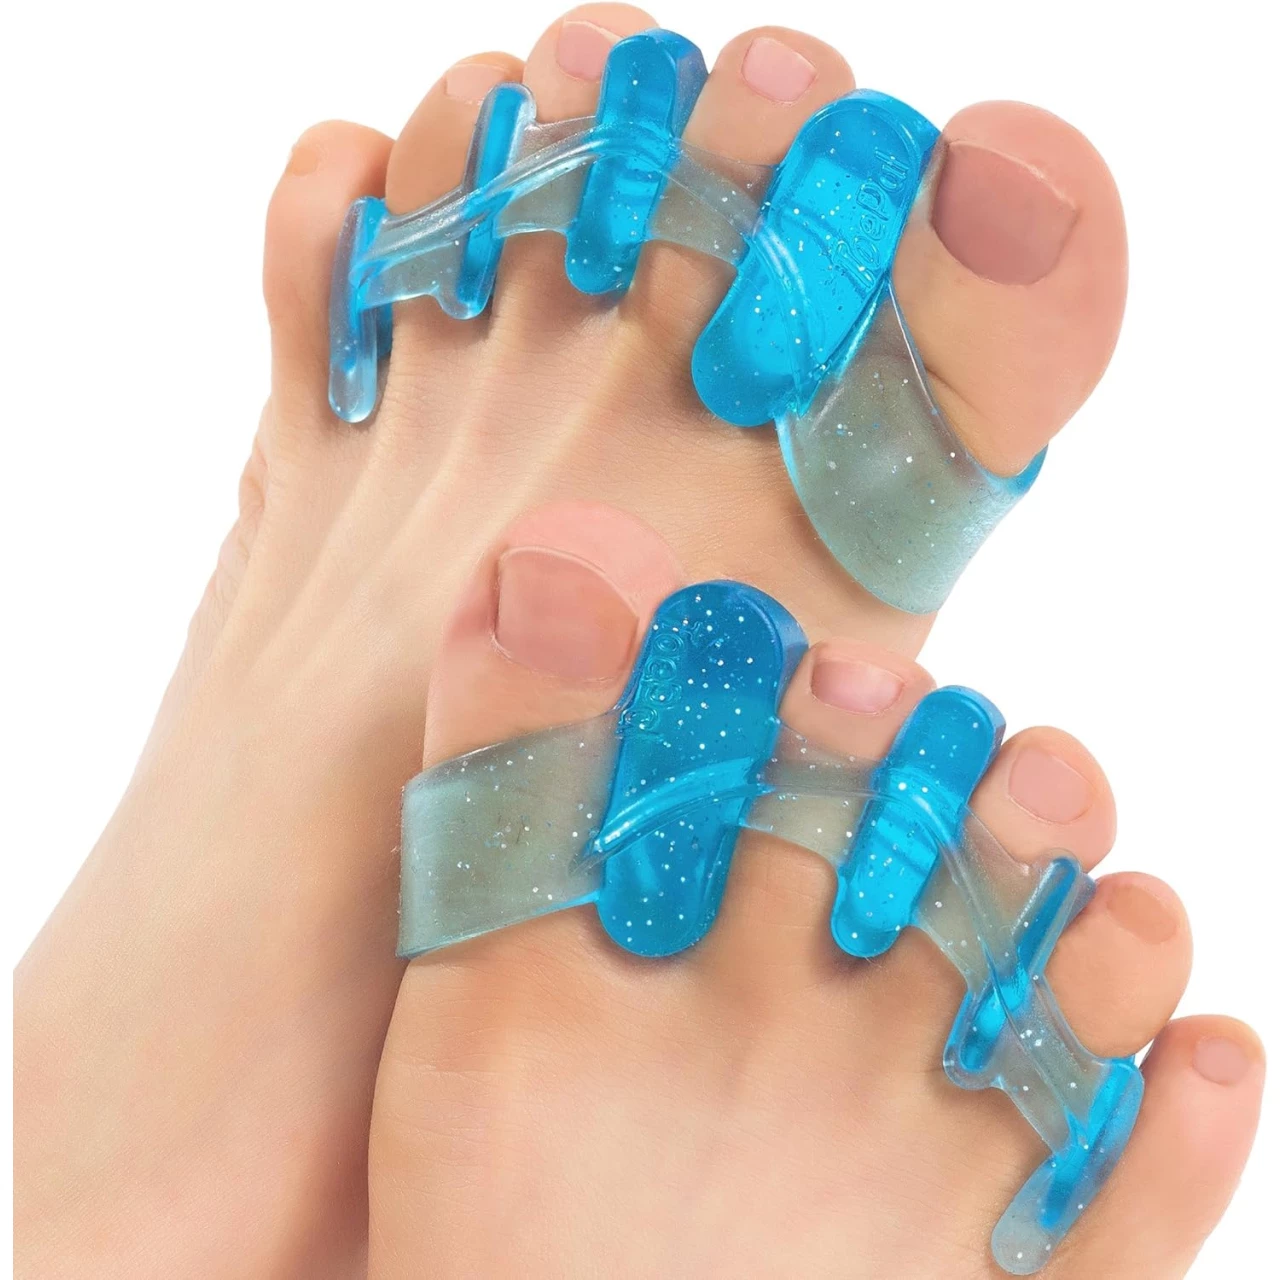 DR. JK- ToePal Gel Toe Separator, Narrow, 1 Pair, Toe Spacers, Toe Straightener, Hammer Toe Straightener, Toe Spreader, Toe Stretcher, Toe Corrector